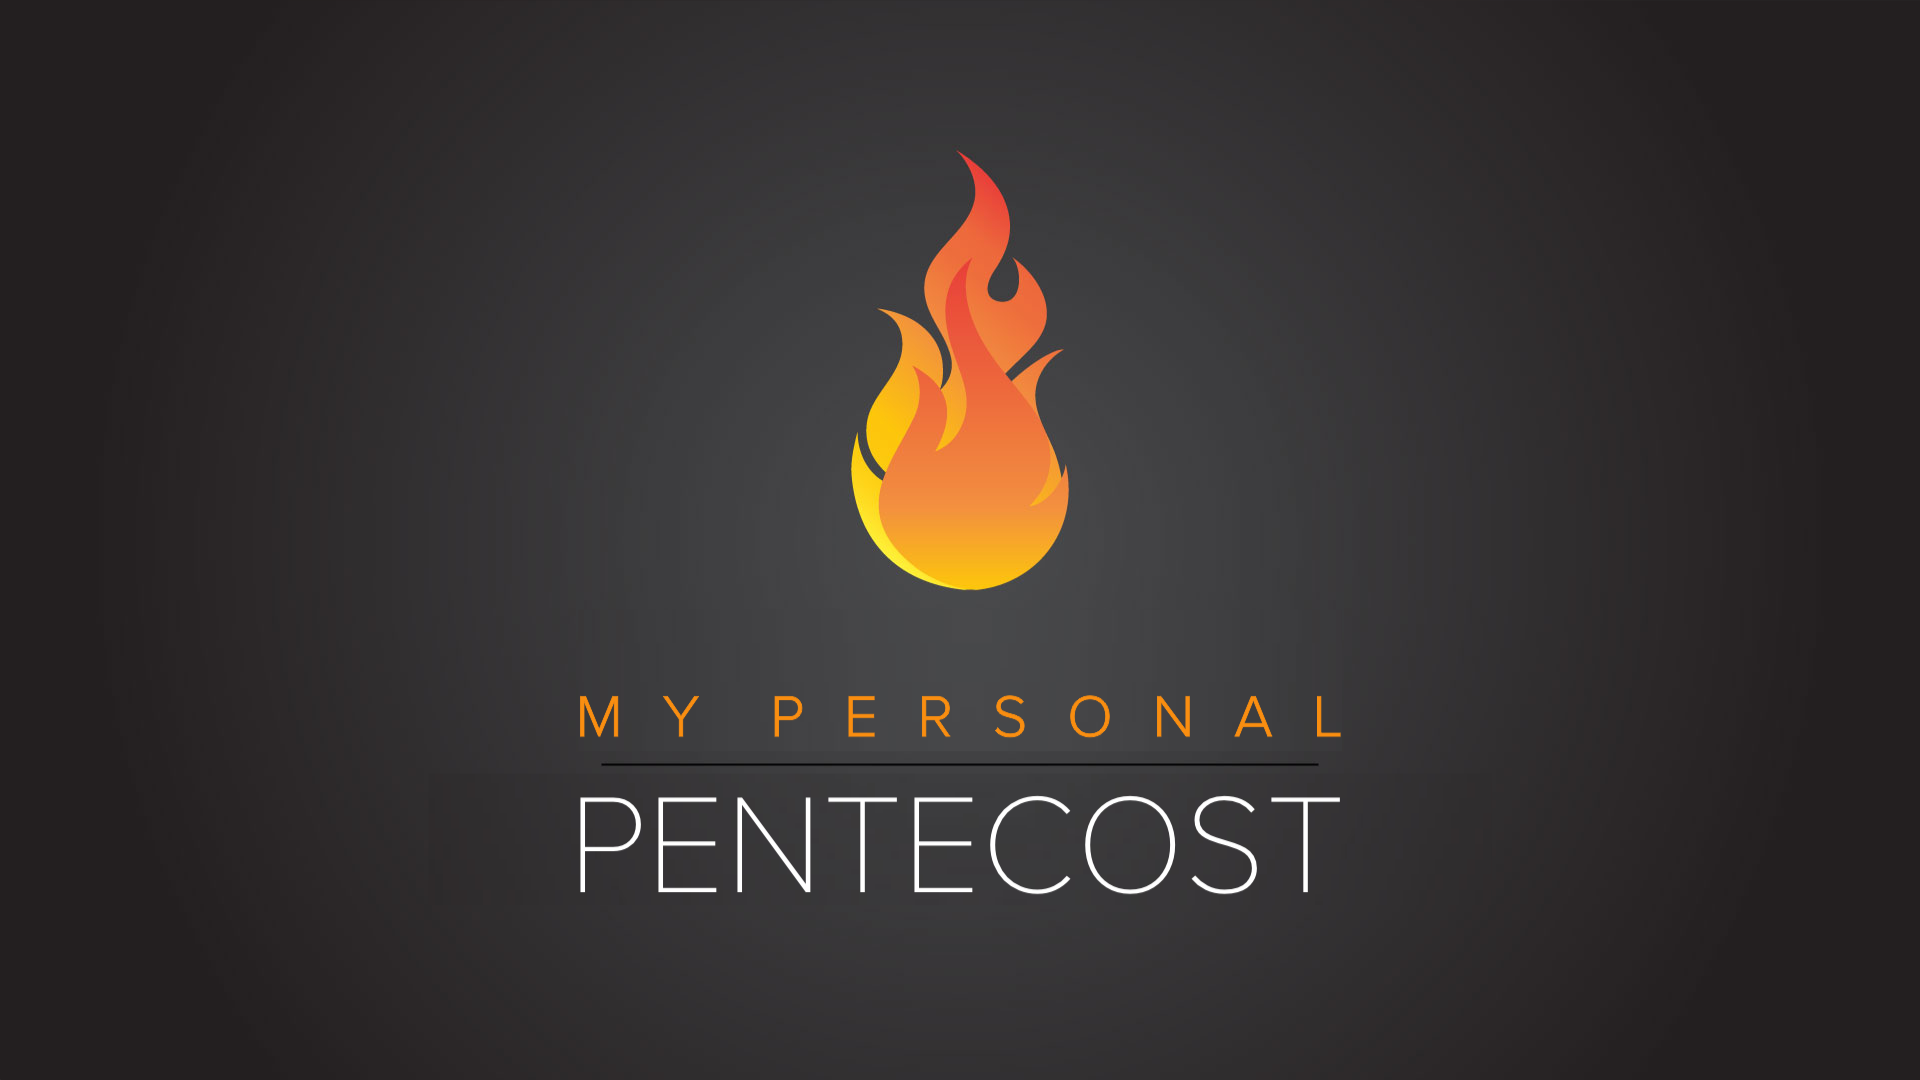 Personal Pentecost